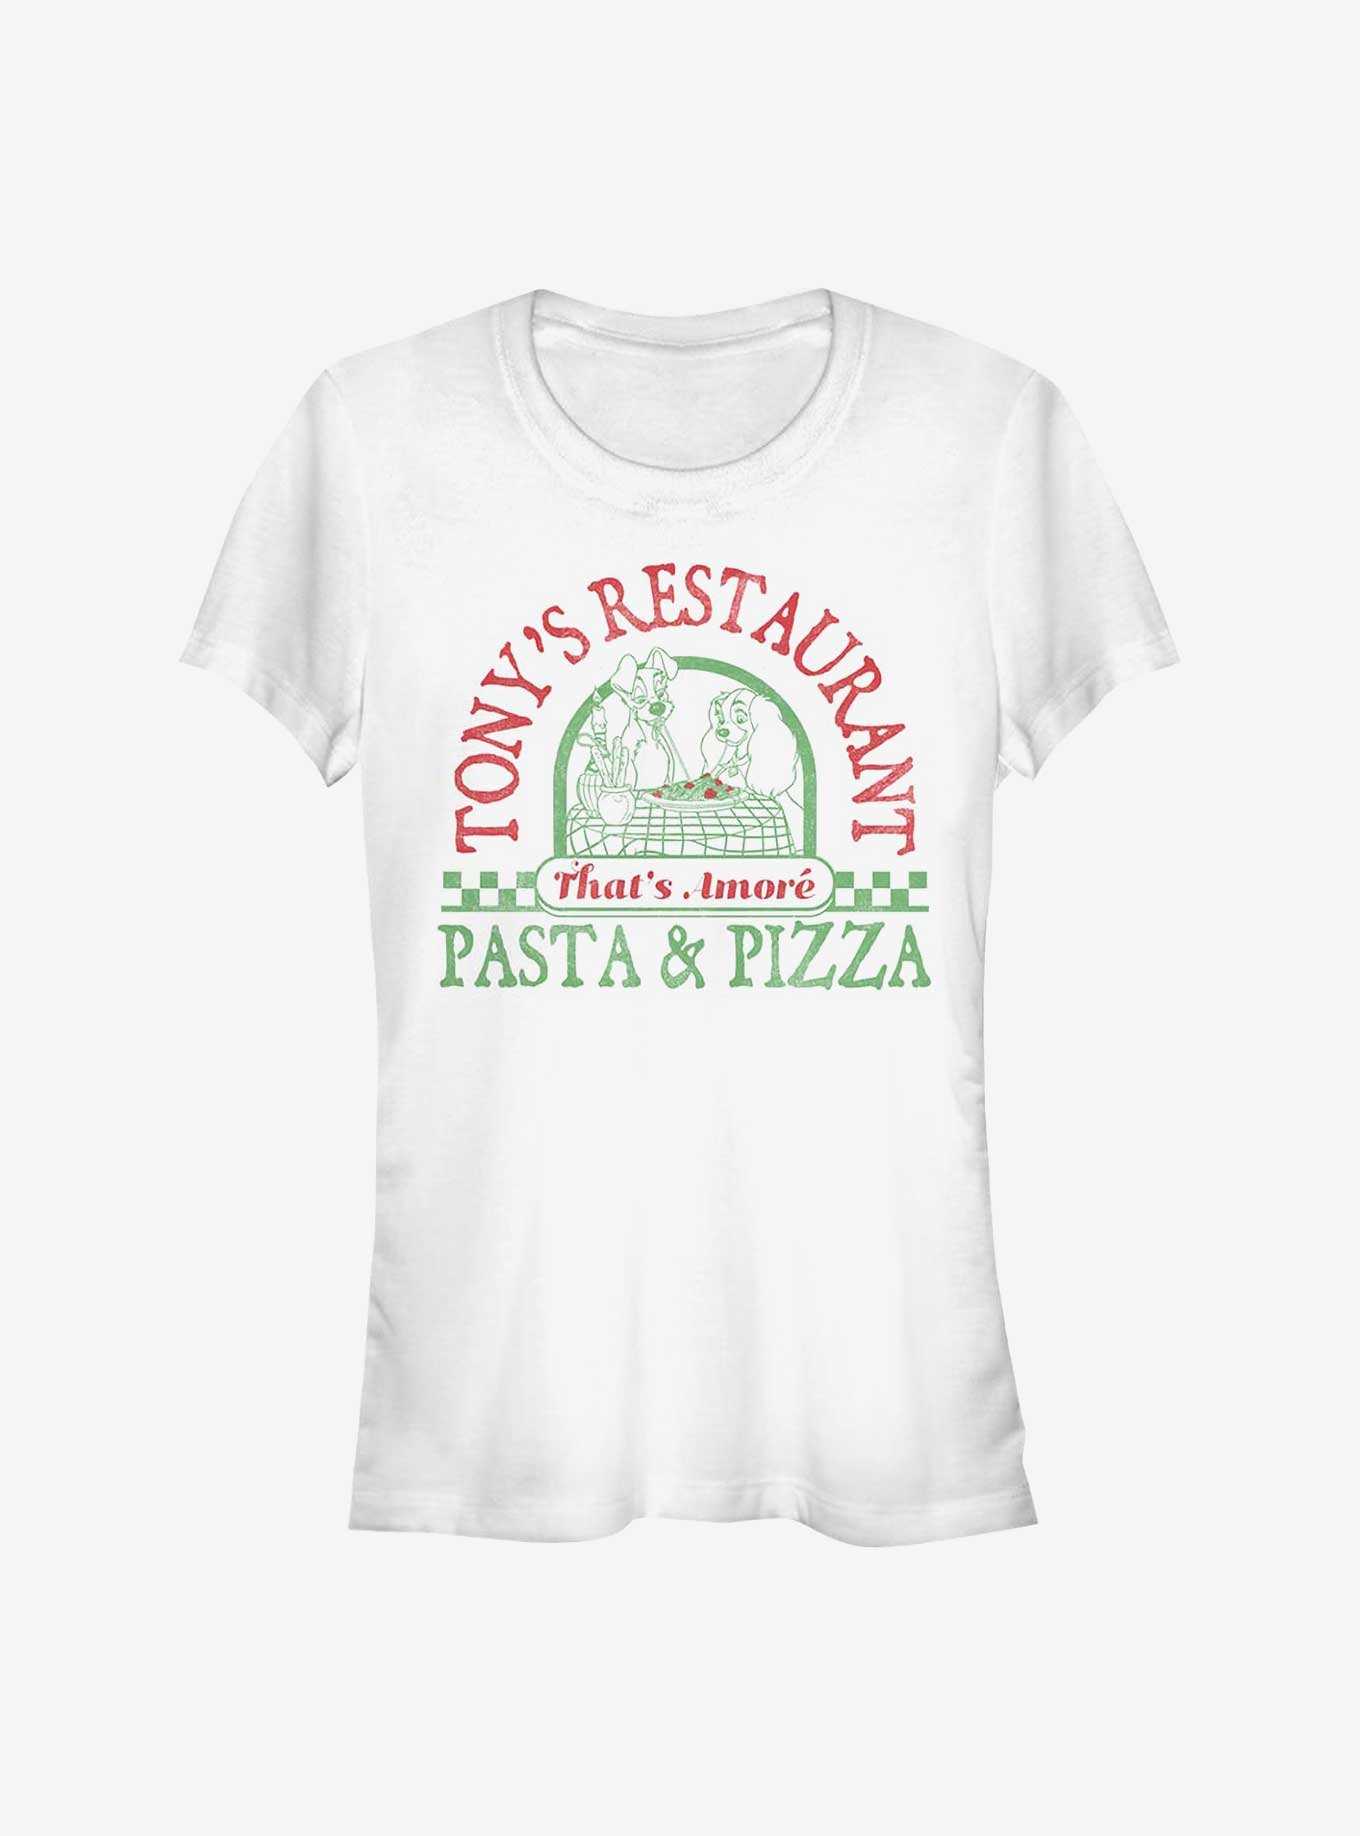 Disney Lady And The Tramp Tony's Restaurant Pasta & Pizza Girls T-Shirt, , hi-res